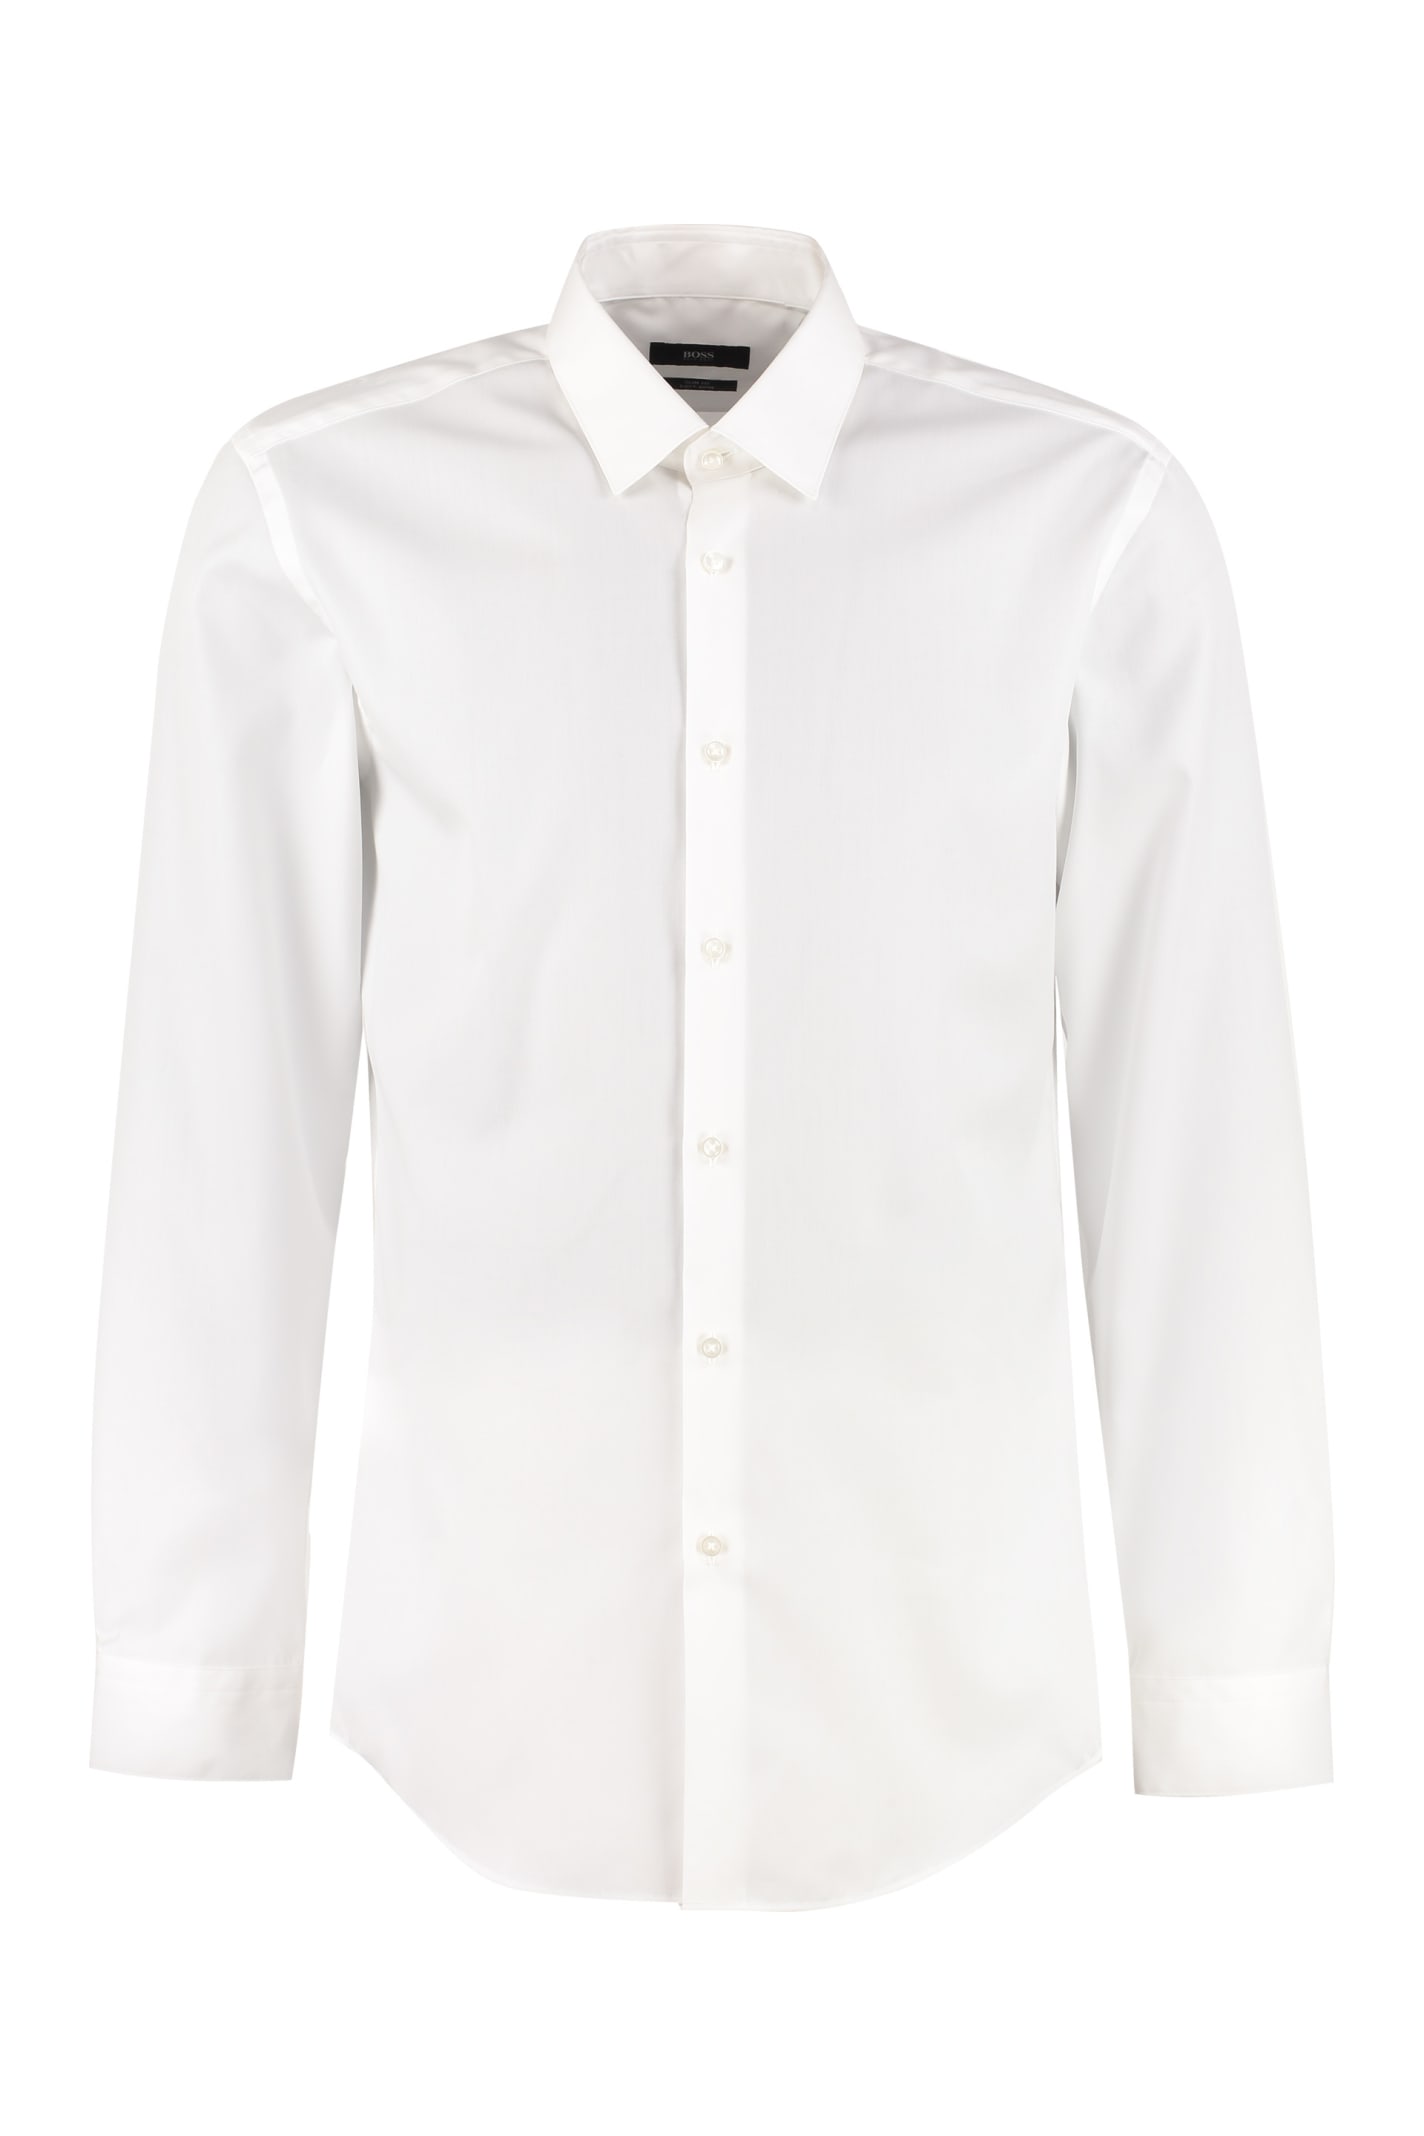 Hugo Boss Hugo Boss Slim Fit Cotton Shirt - White - 10975985 | italist